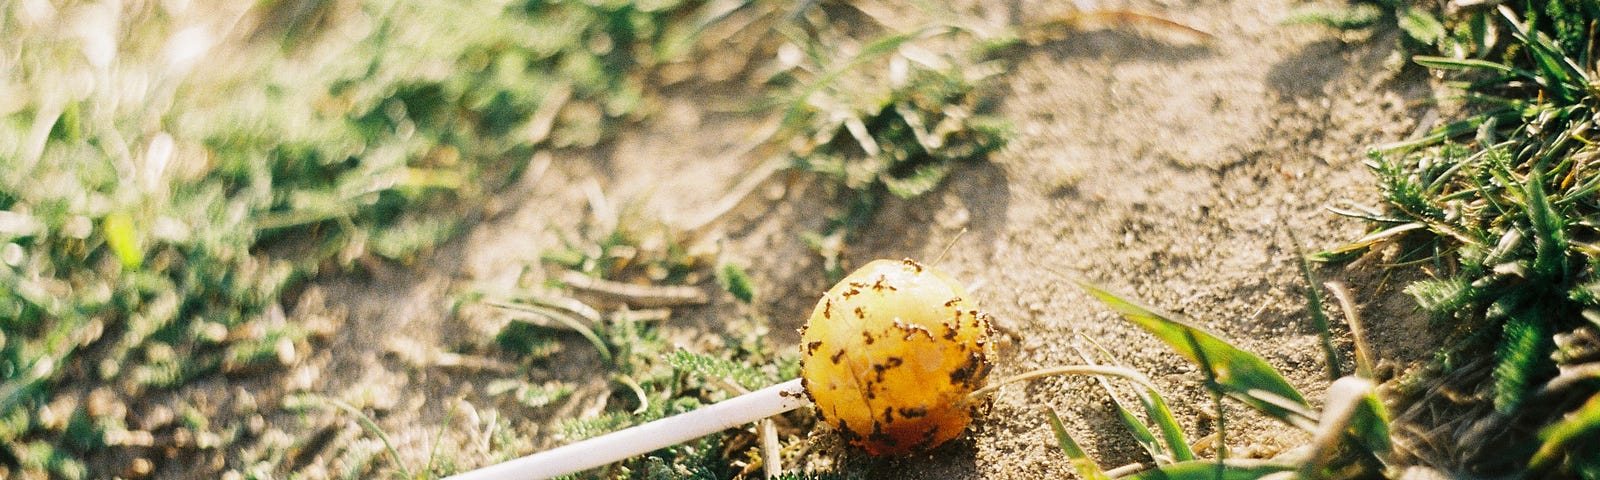 A fallen yellow lollypop